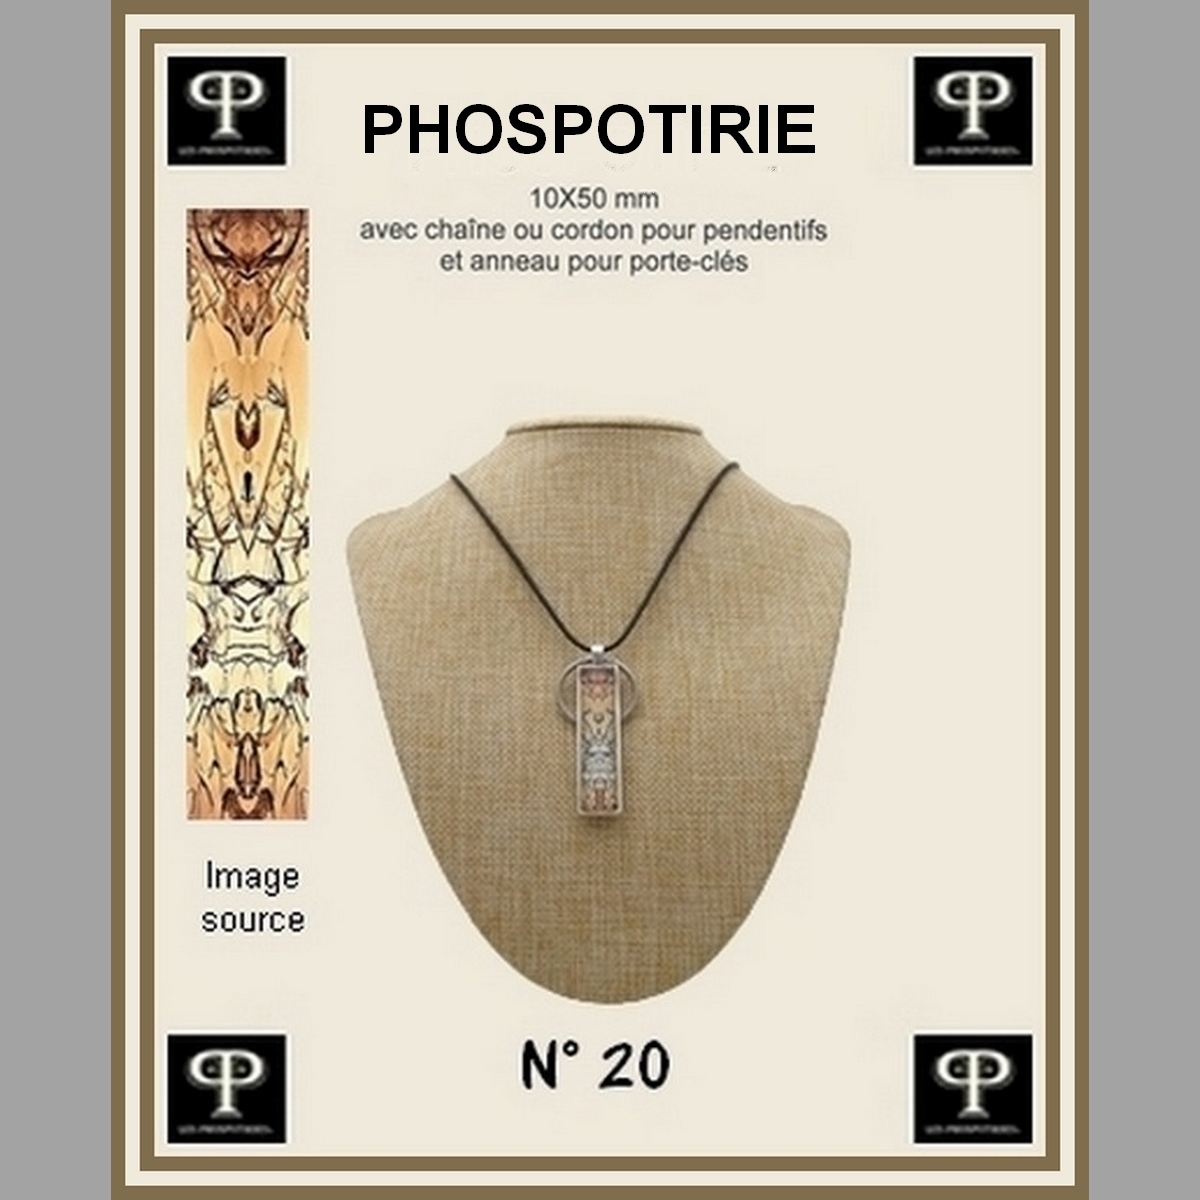 Phospotirie version TOTEM 10X50 mm N°20 pour pendentifs ou porte-clés